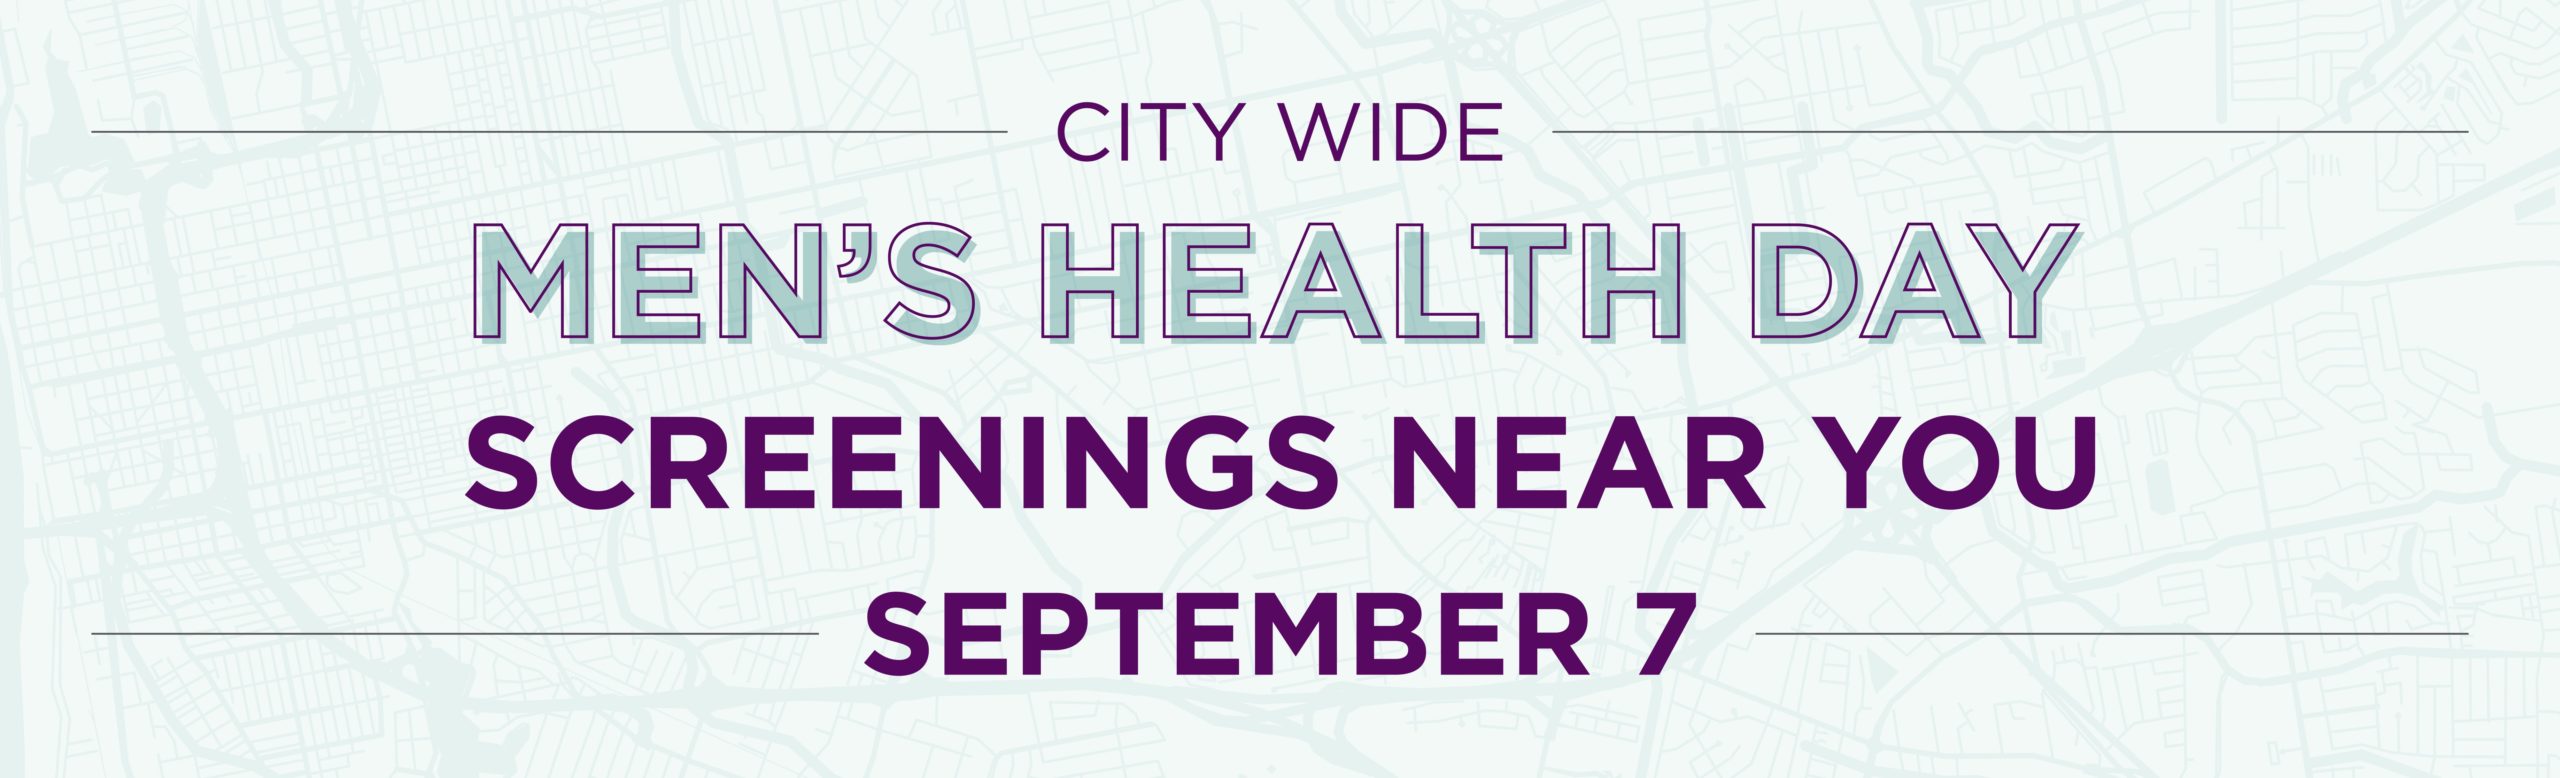 City Wide Men's Health Day Screenings Near You September 7